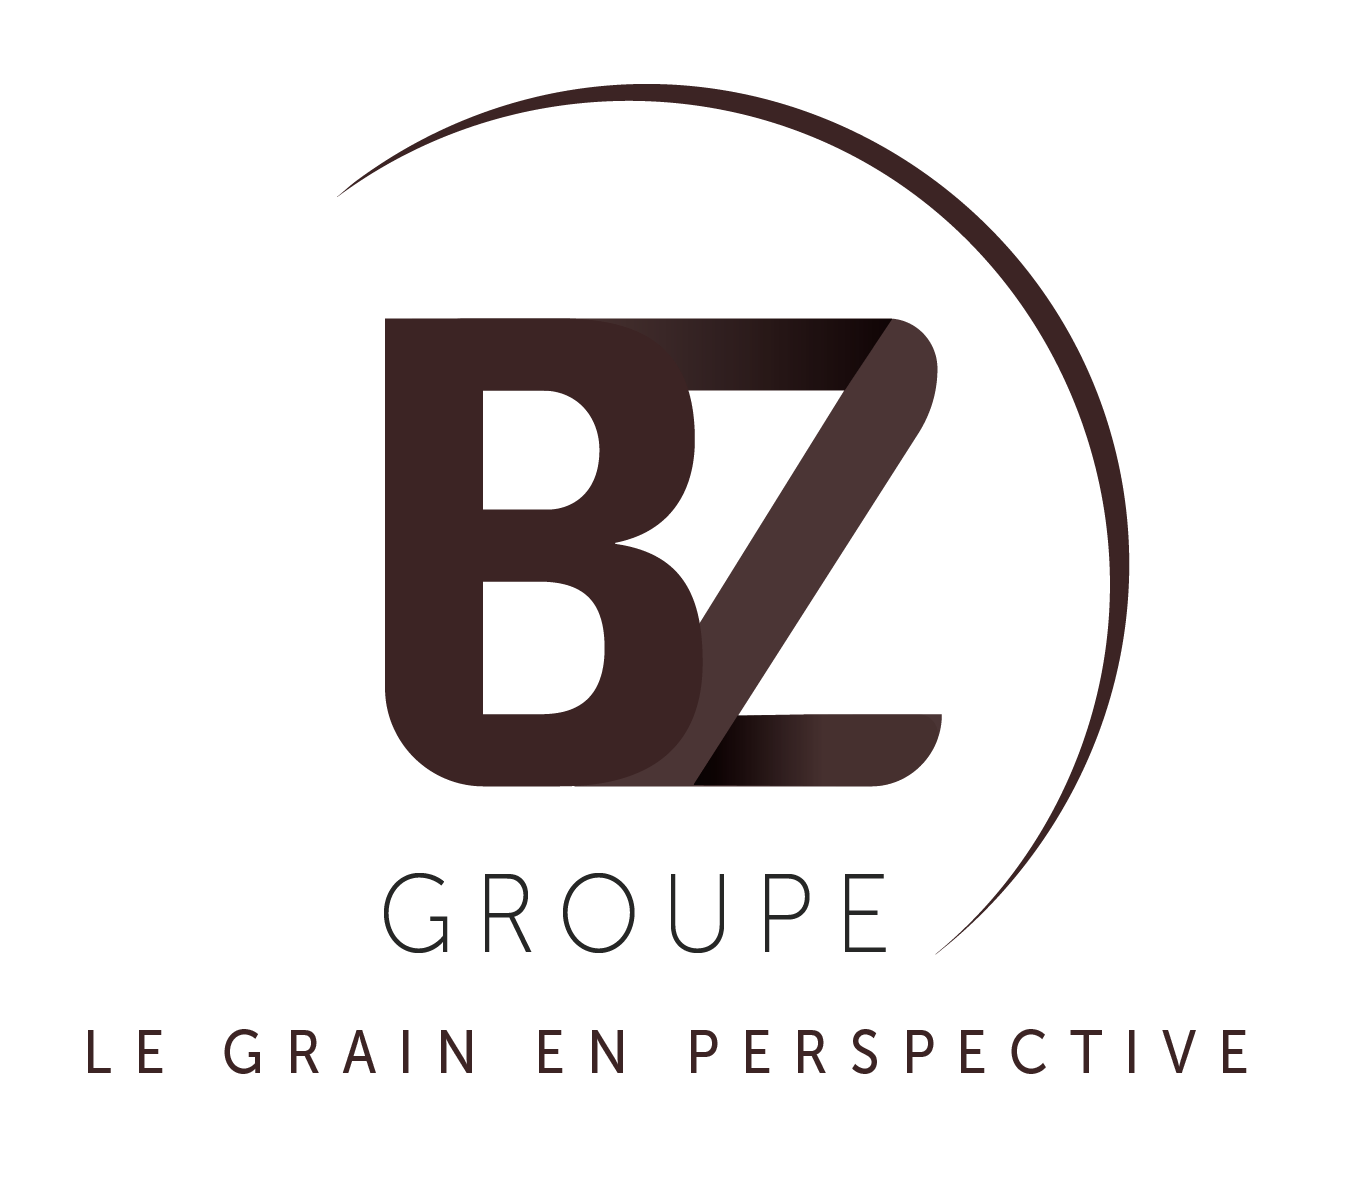 Groupe BZ